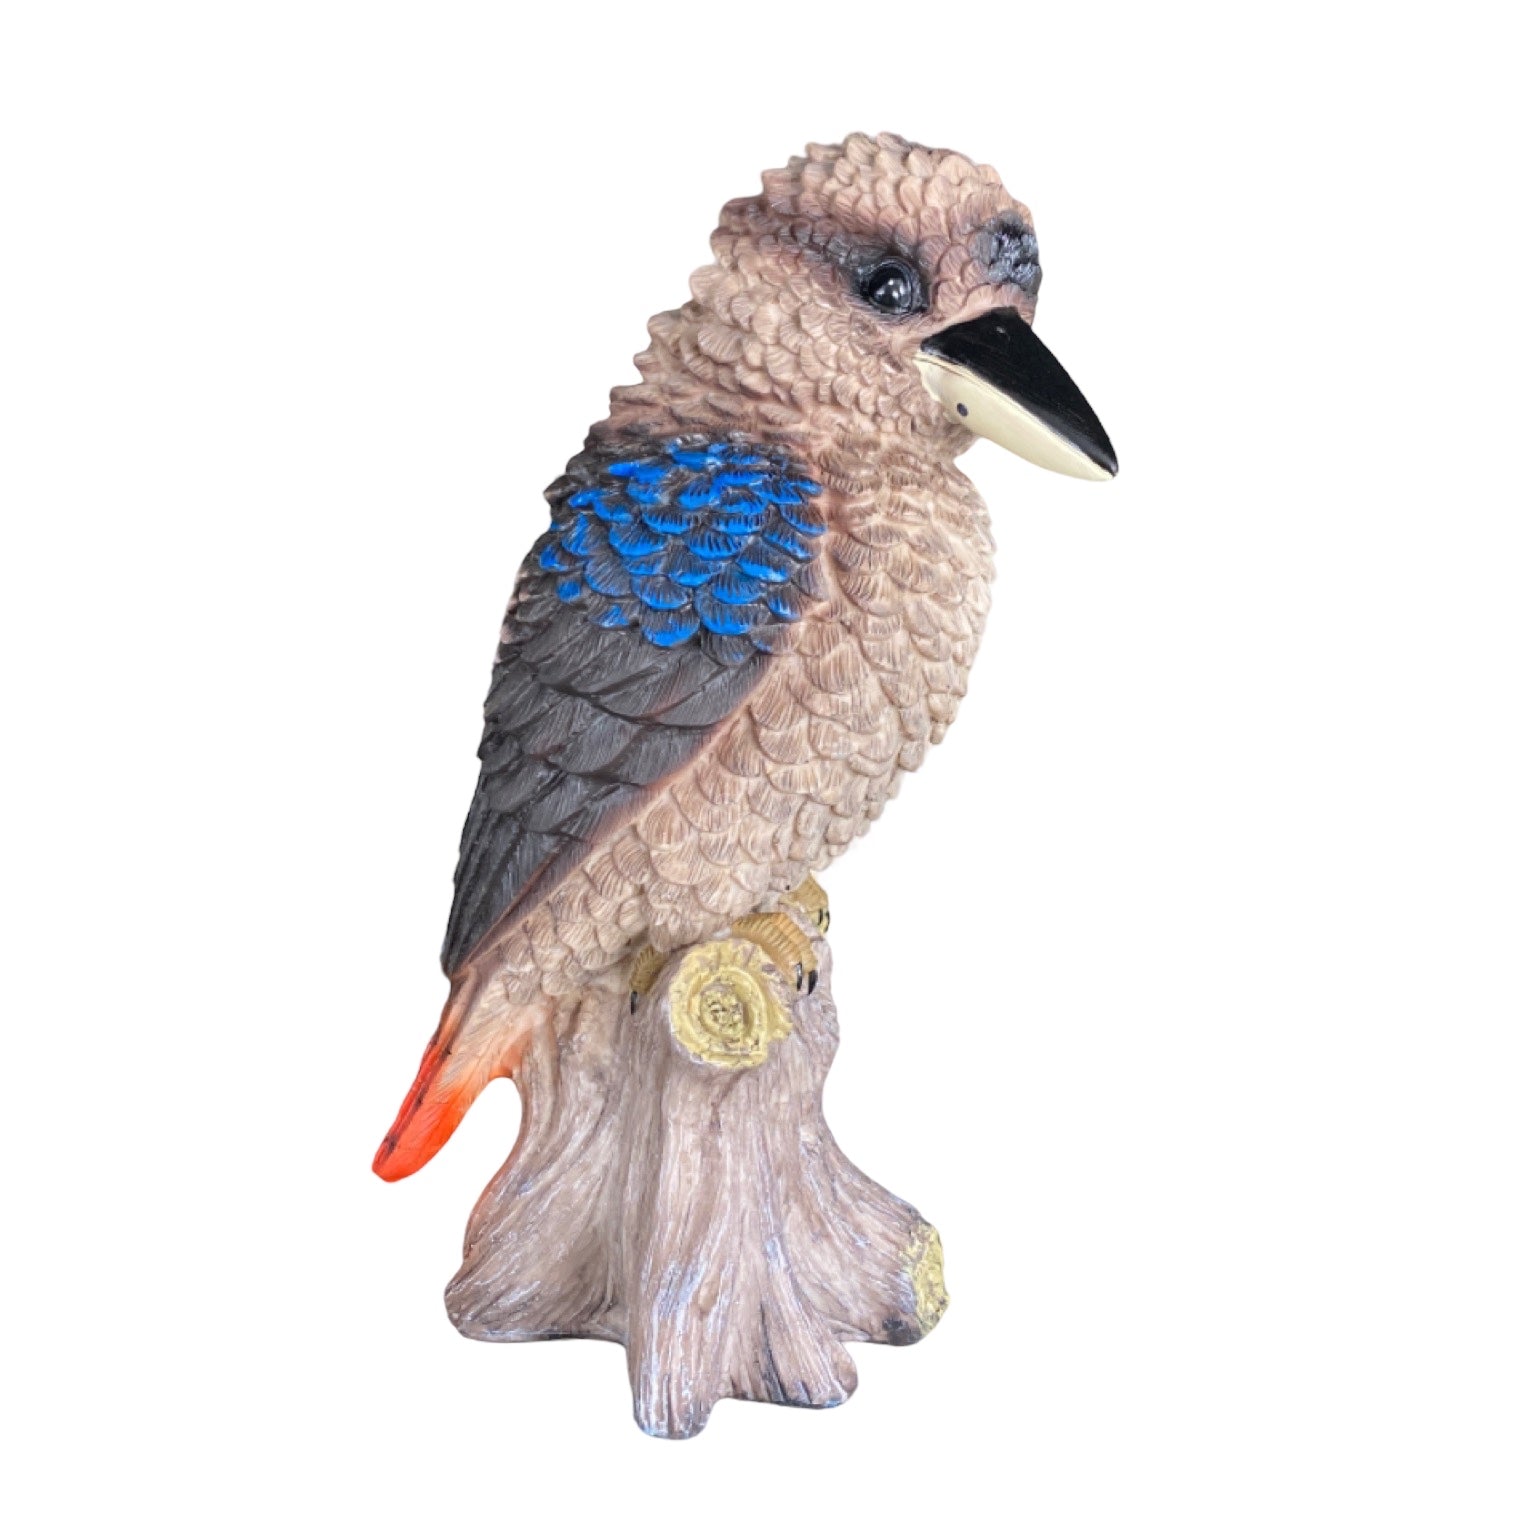 Kookaburra 35cm Ornament - The Renmy Store Homewares & Gifts 